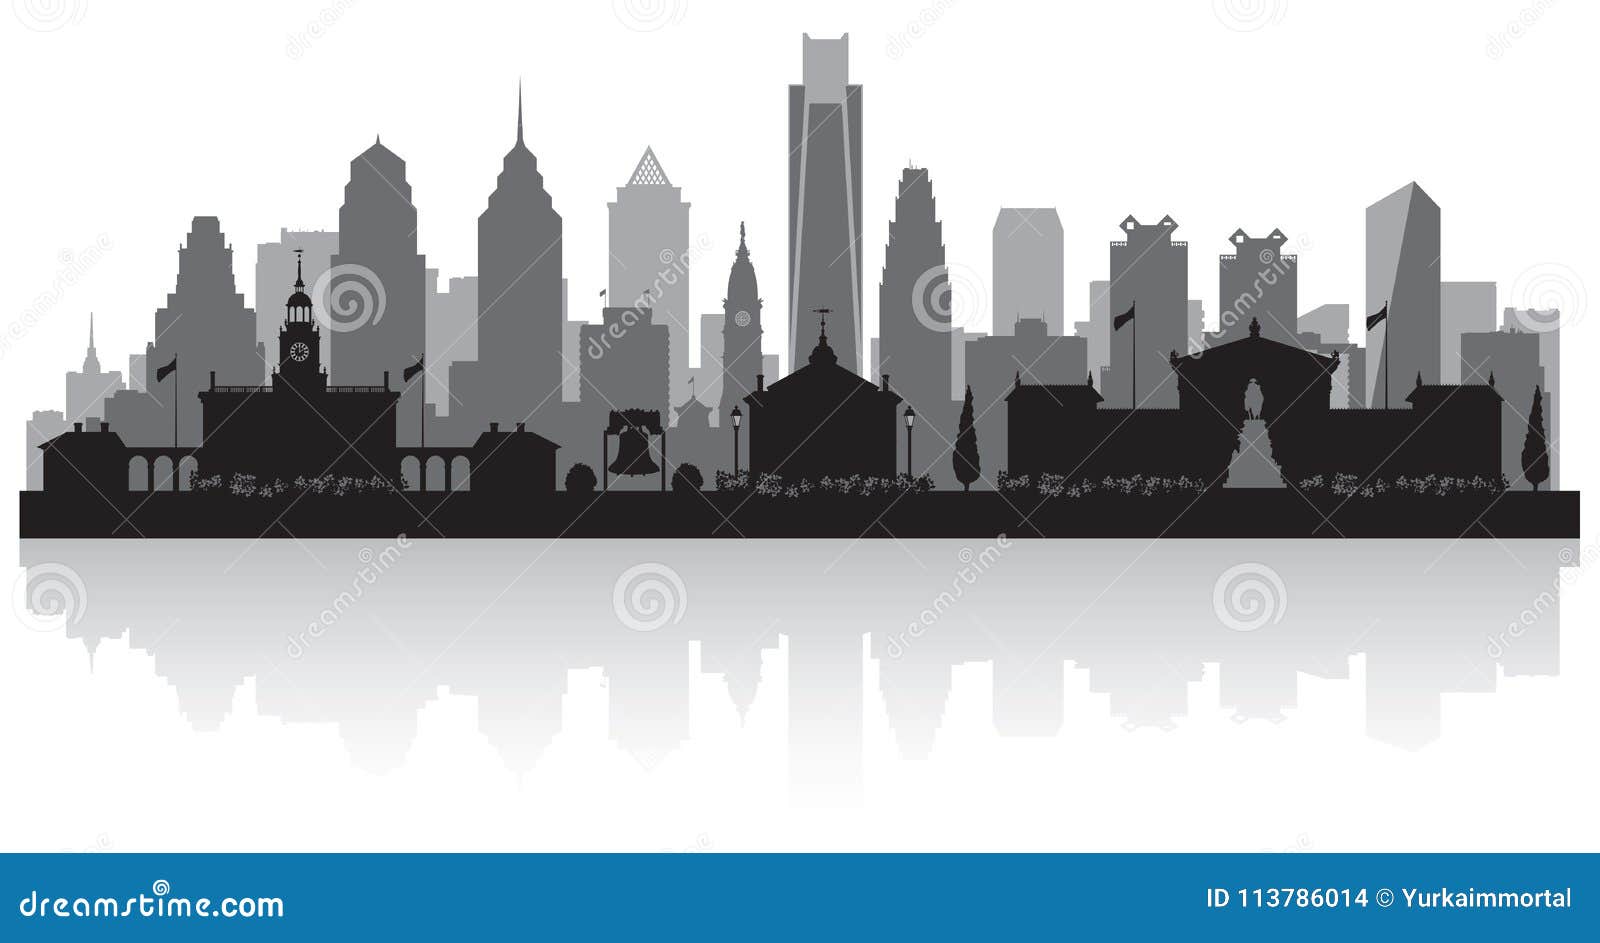 philadelphia pennsylvania city skyline silhouette